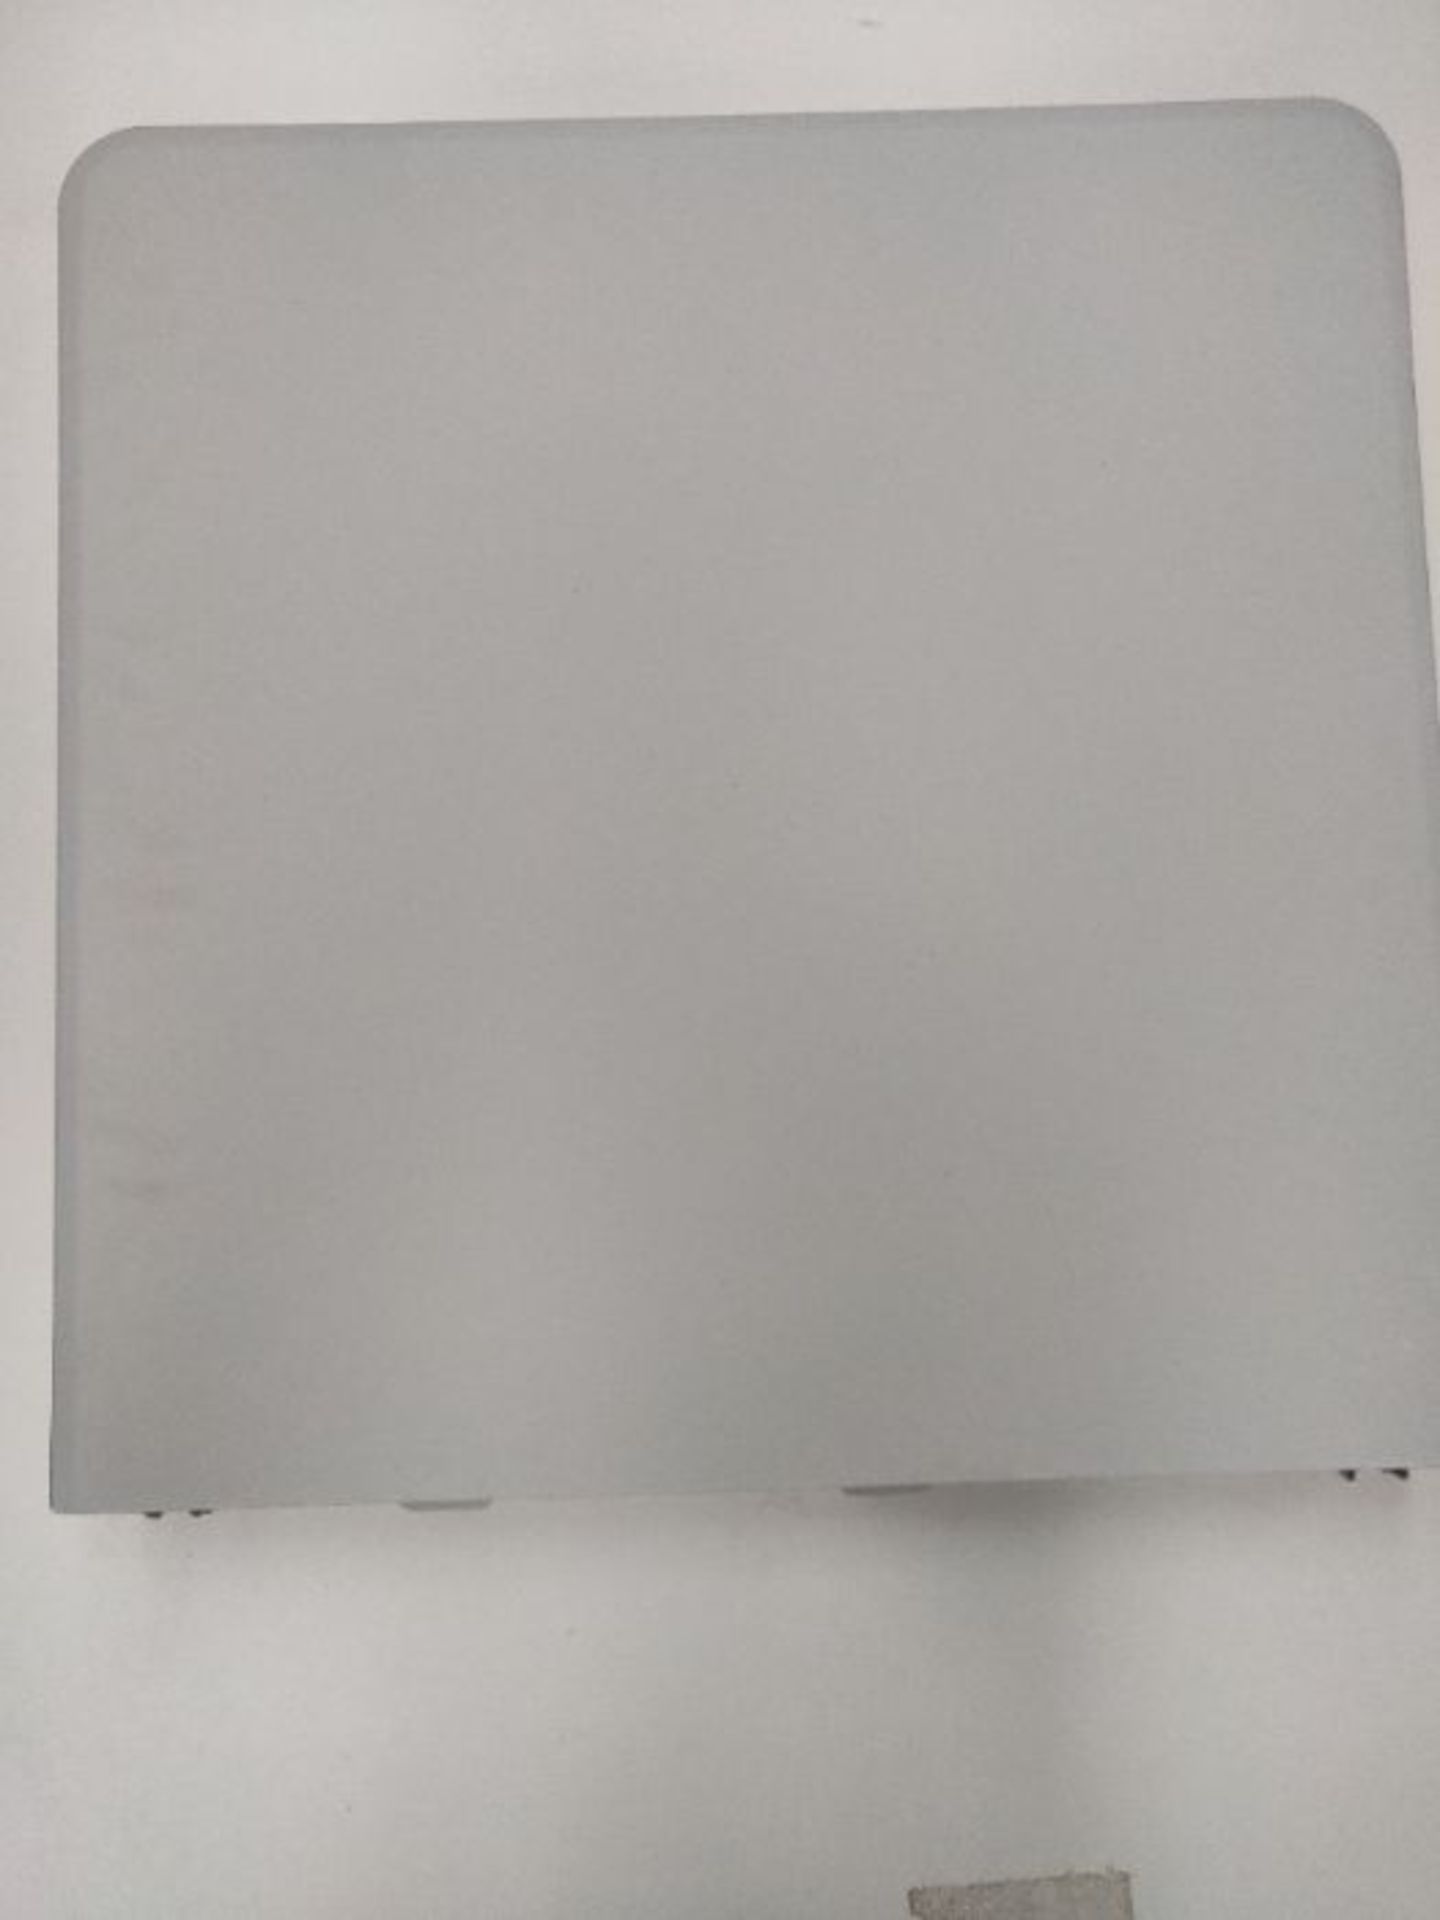 Amazon Basics Heavy Duty Trestle Picnic Folding Table Silver, 4 feet - Image 2 of 3